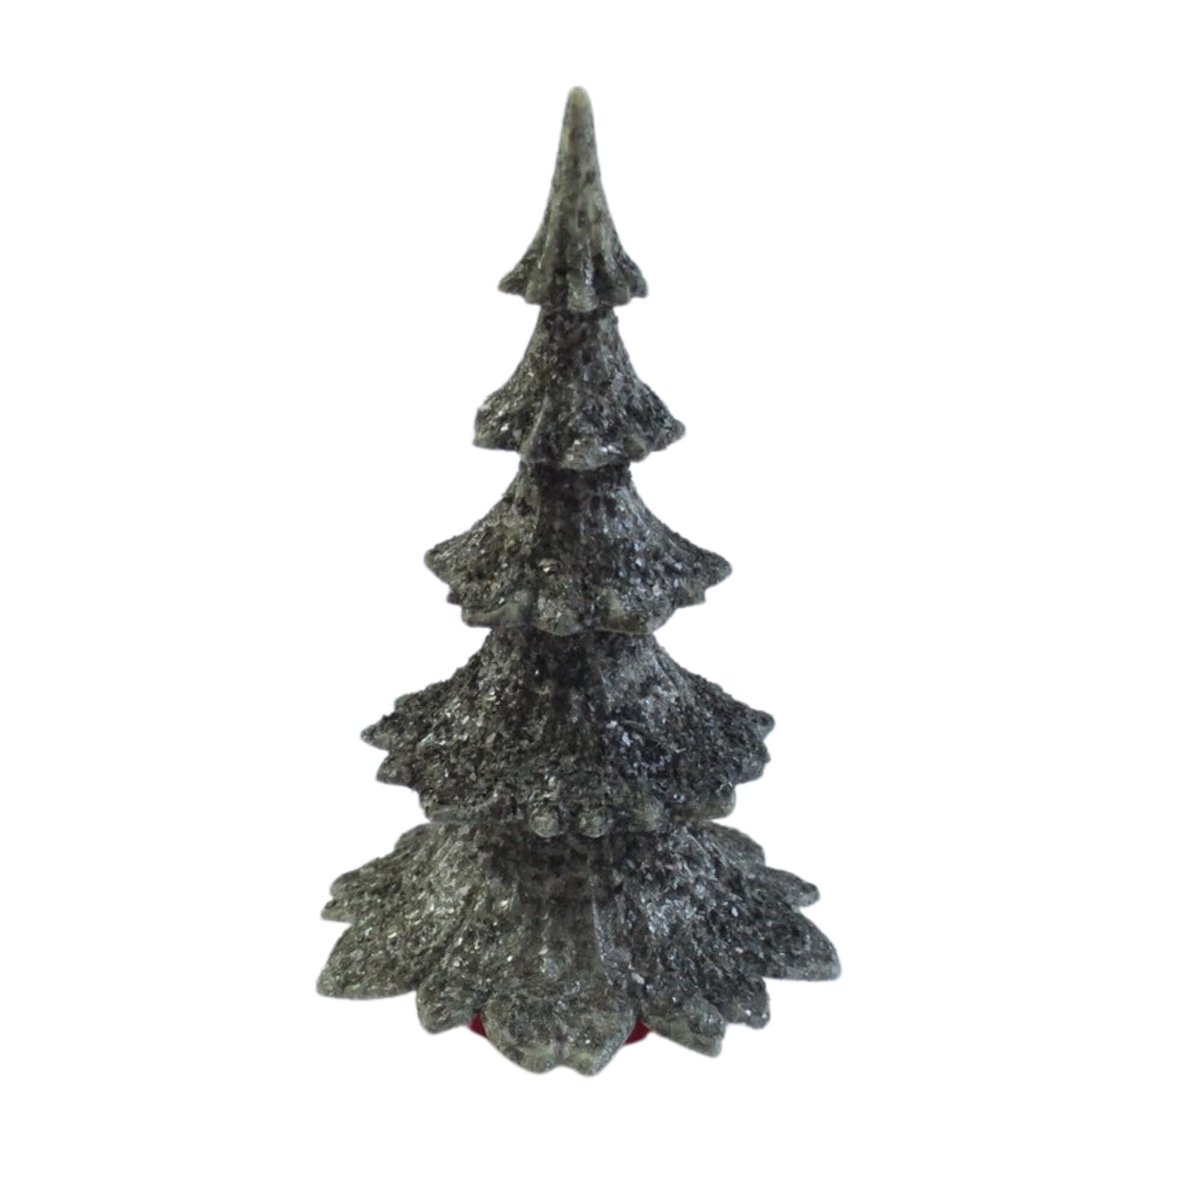 Vintage Putz Christmas Tree, Mica Glitter, Hard Plastic, W. Germany 3.5' High, Sold Separately tuppu.net/760b2aa9 #EpiconEtsy #Holidays2023 #SMILEtt23 #FestiveVintage #TabletopTrees